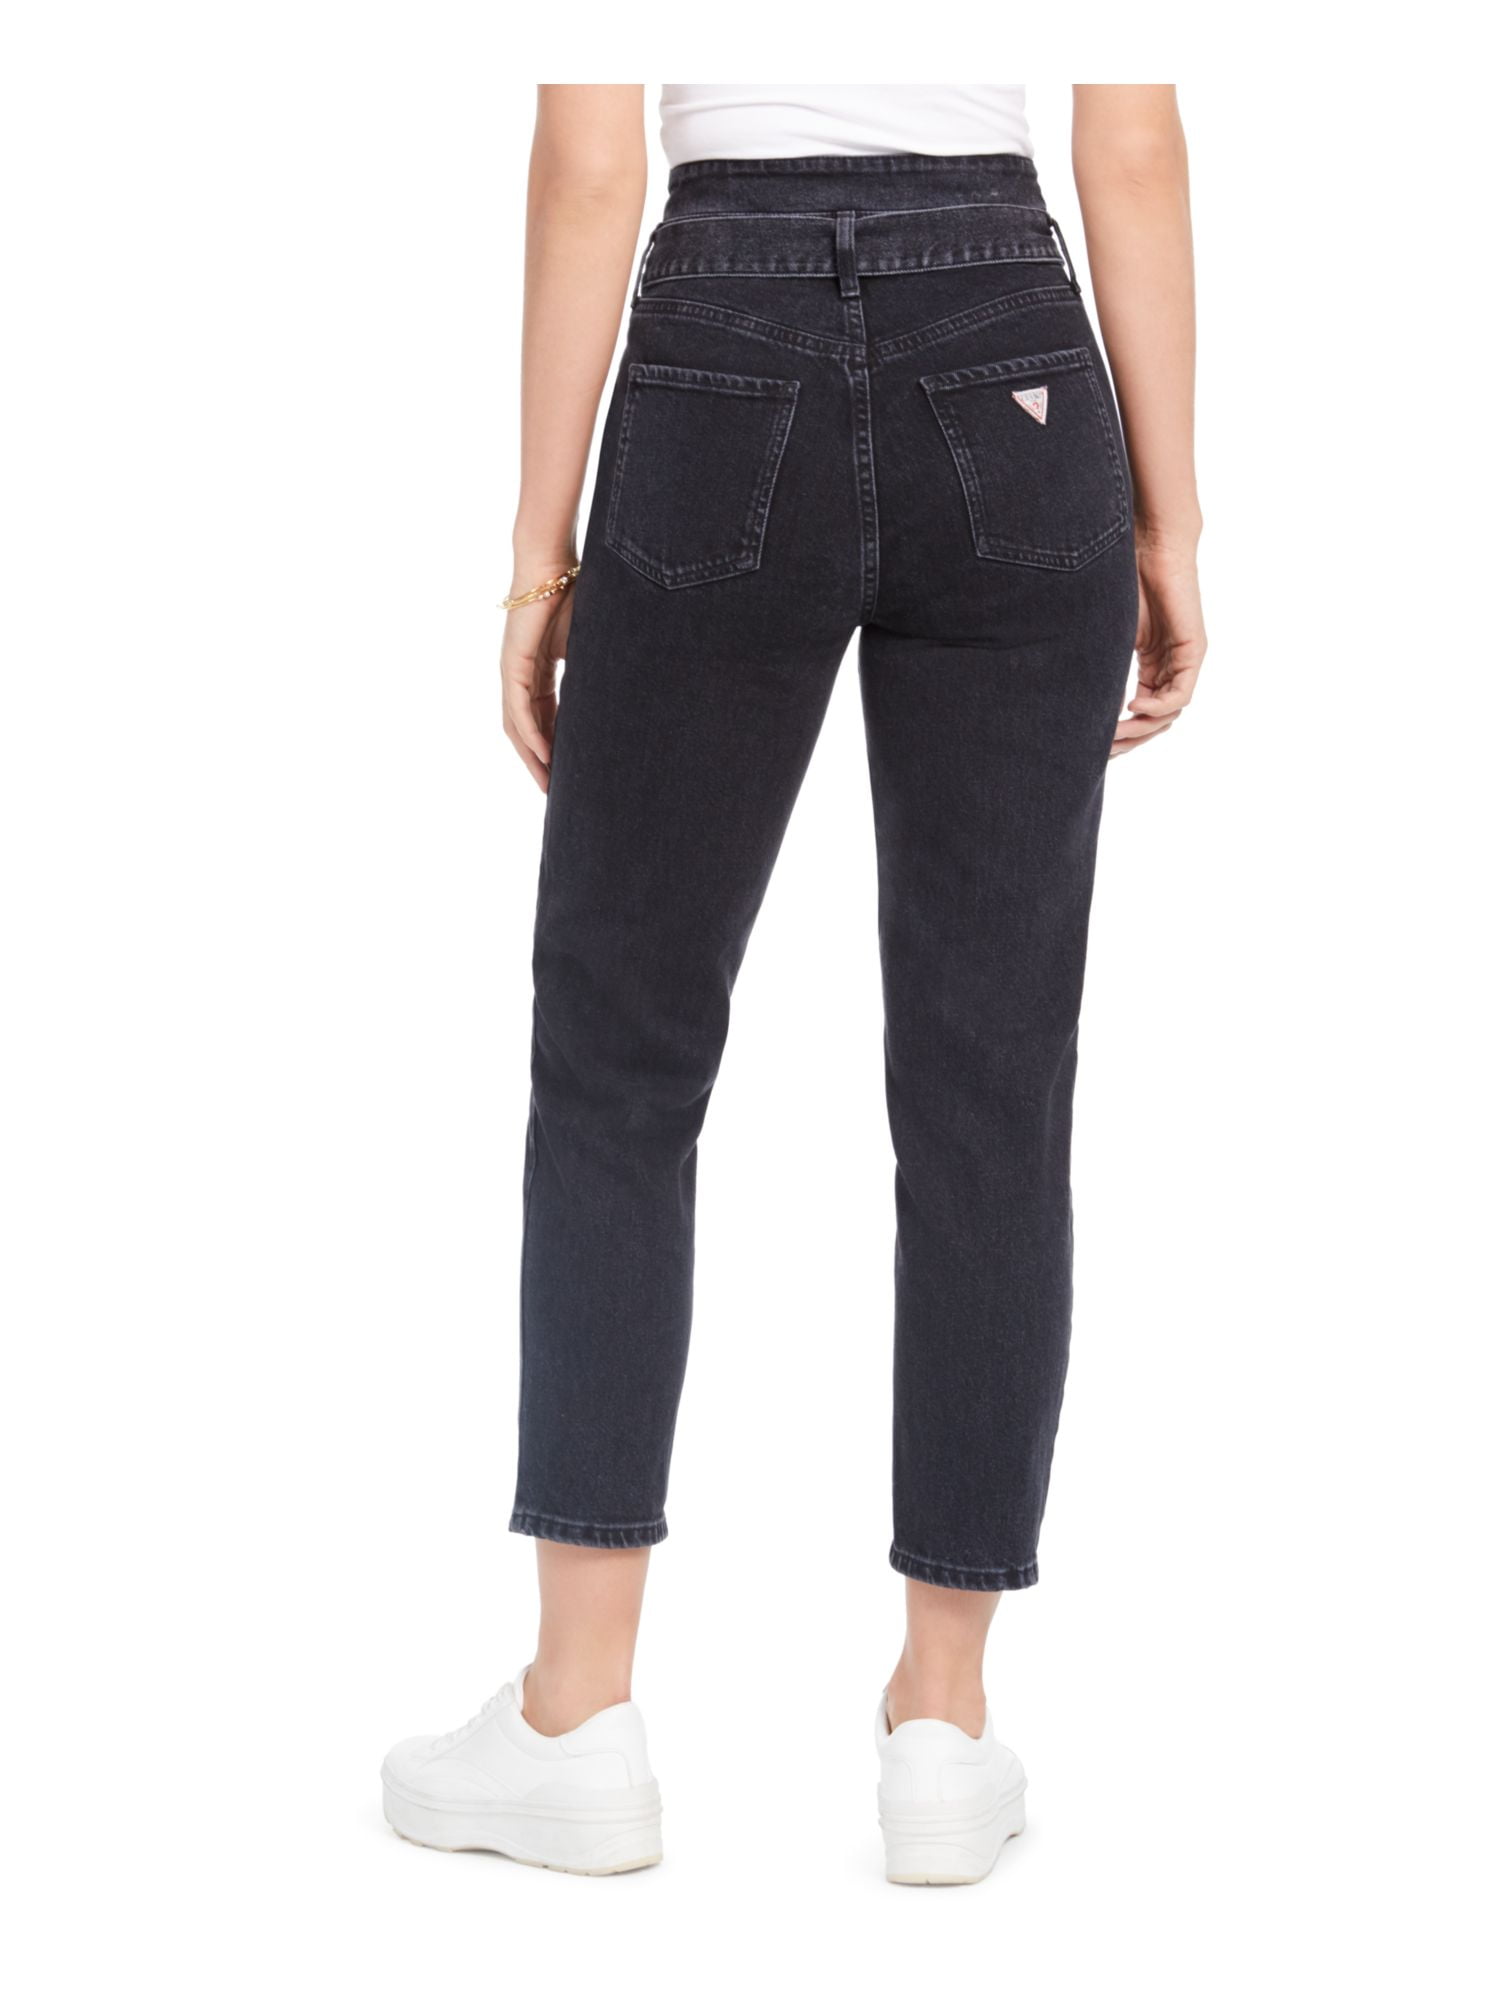 Bekentenis Pijnboom Kaal GUESS Womens Black Belted Jeans Size: 29 - Walmart.com